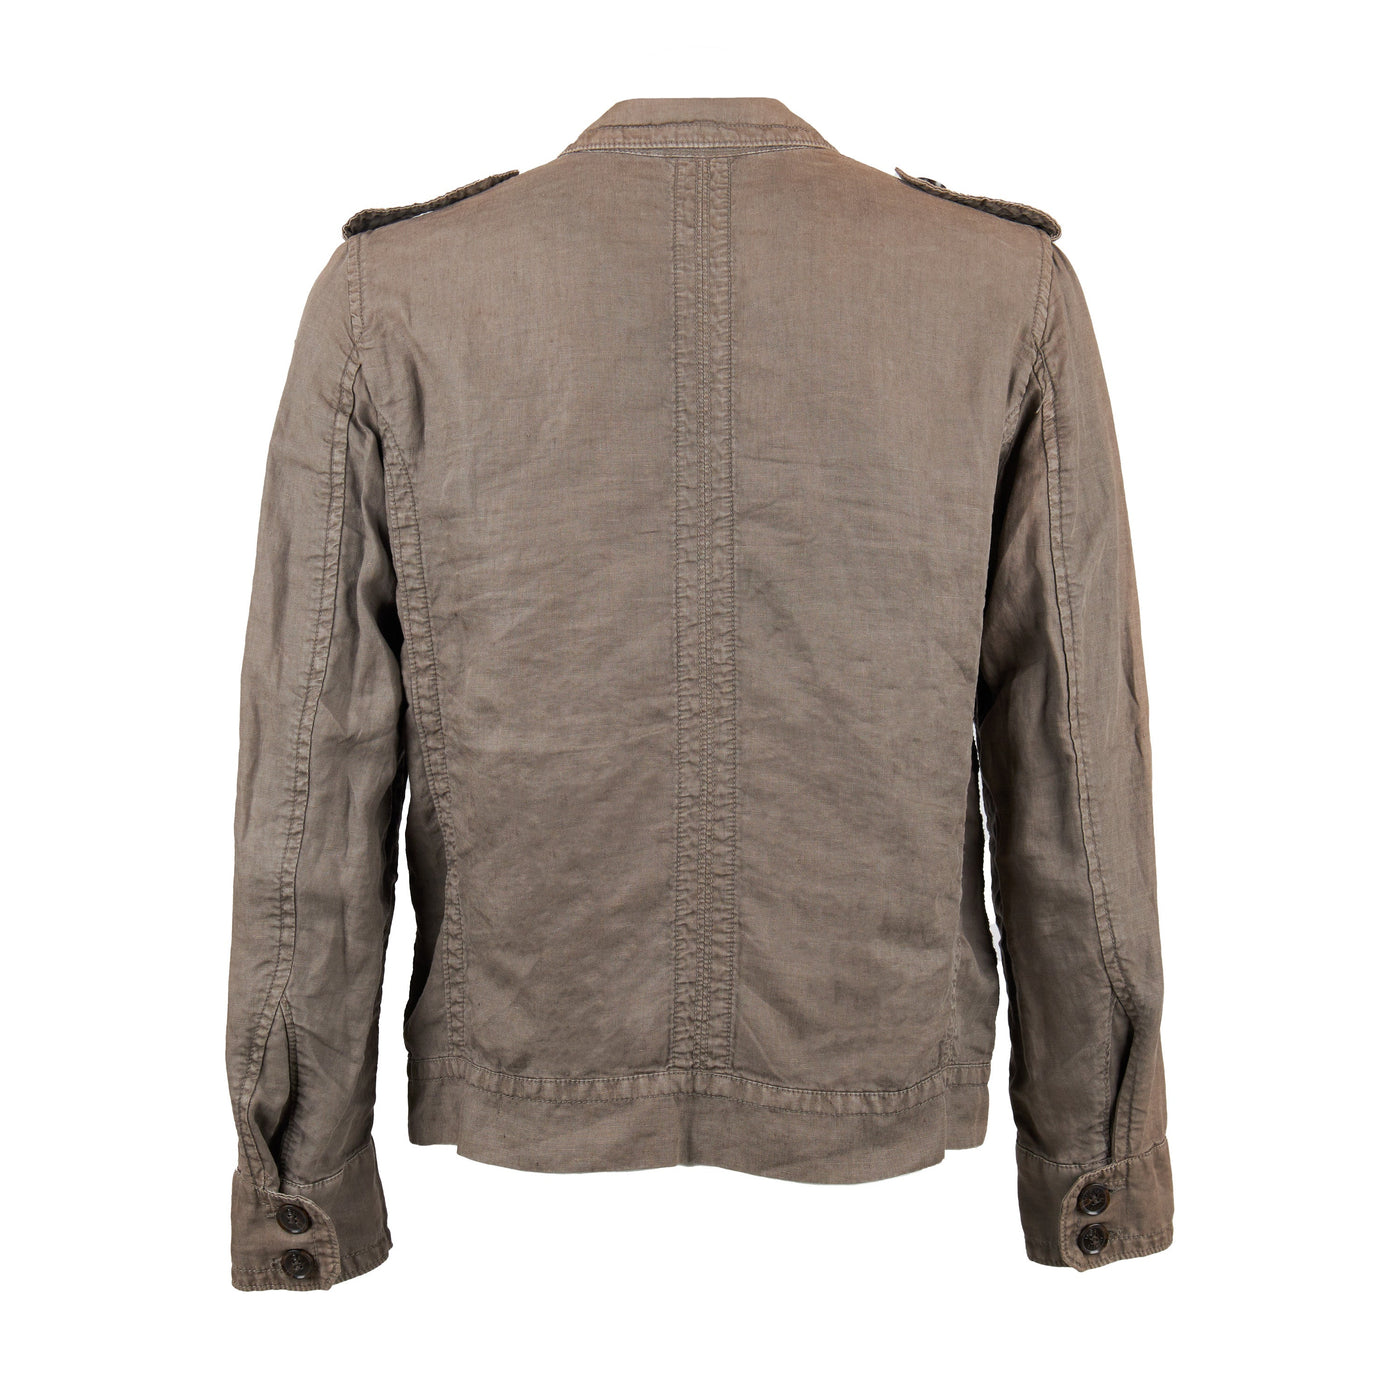 Secondhand Cerruti 1881 Faded Jacket 